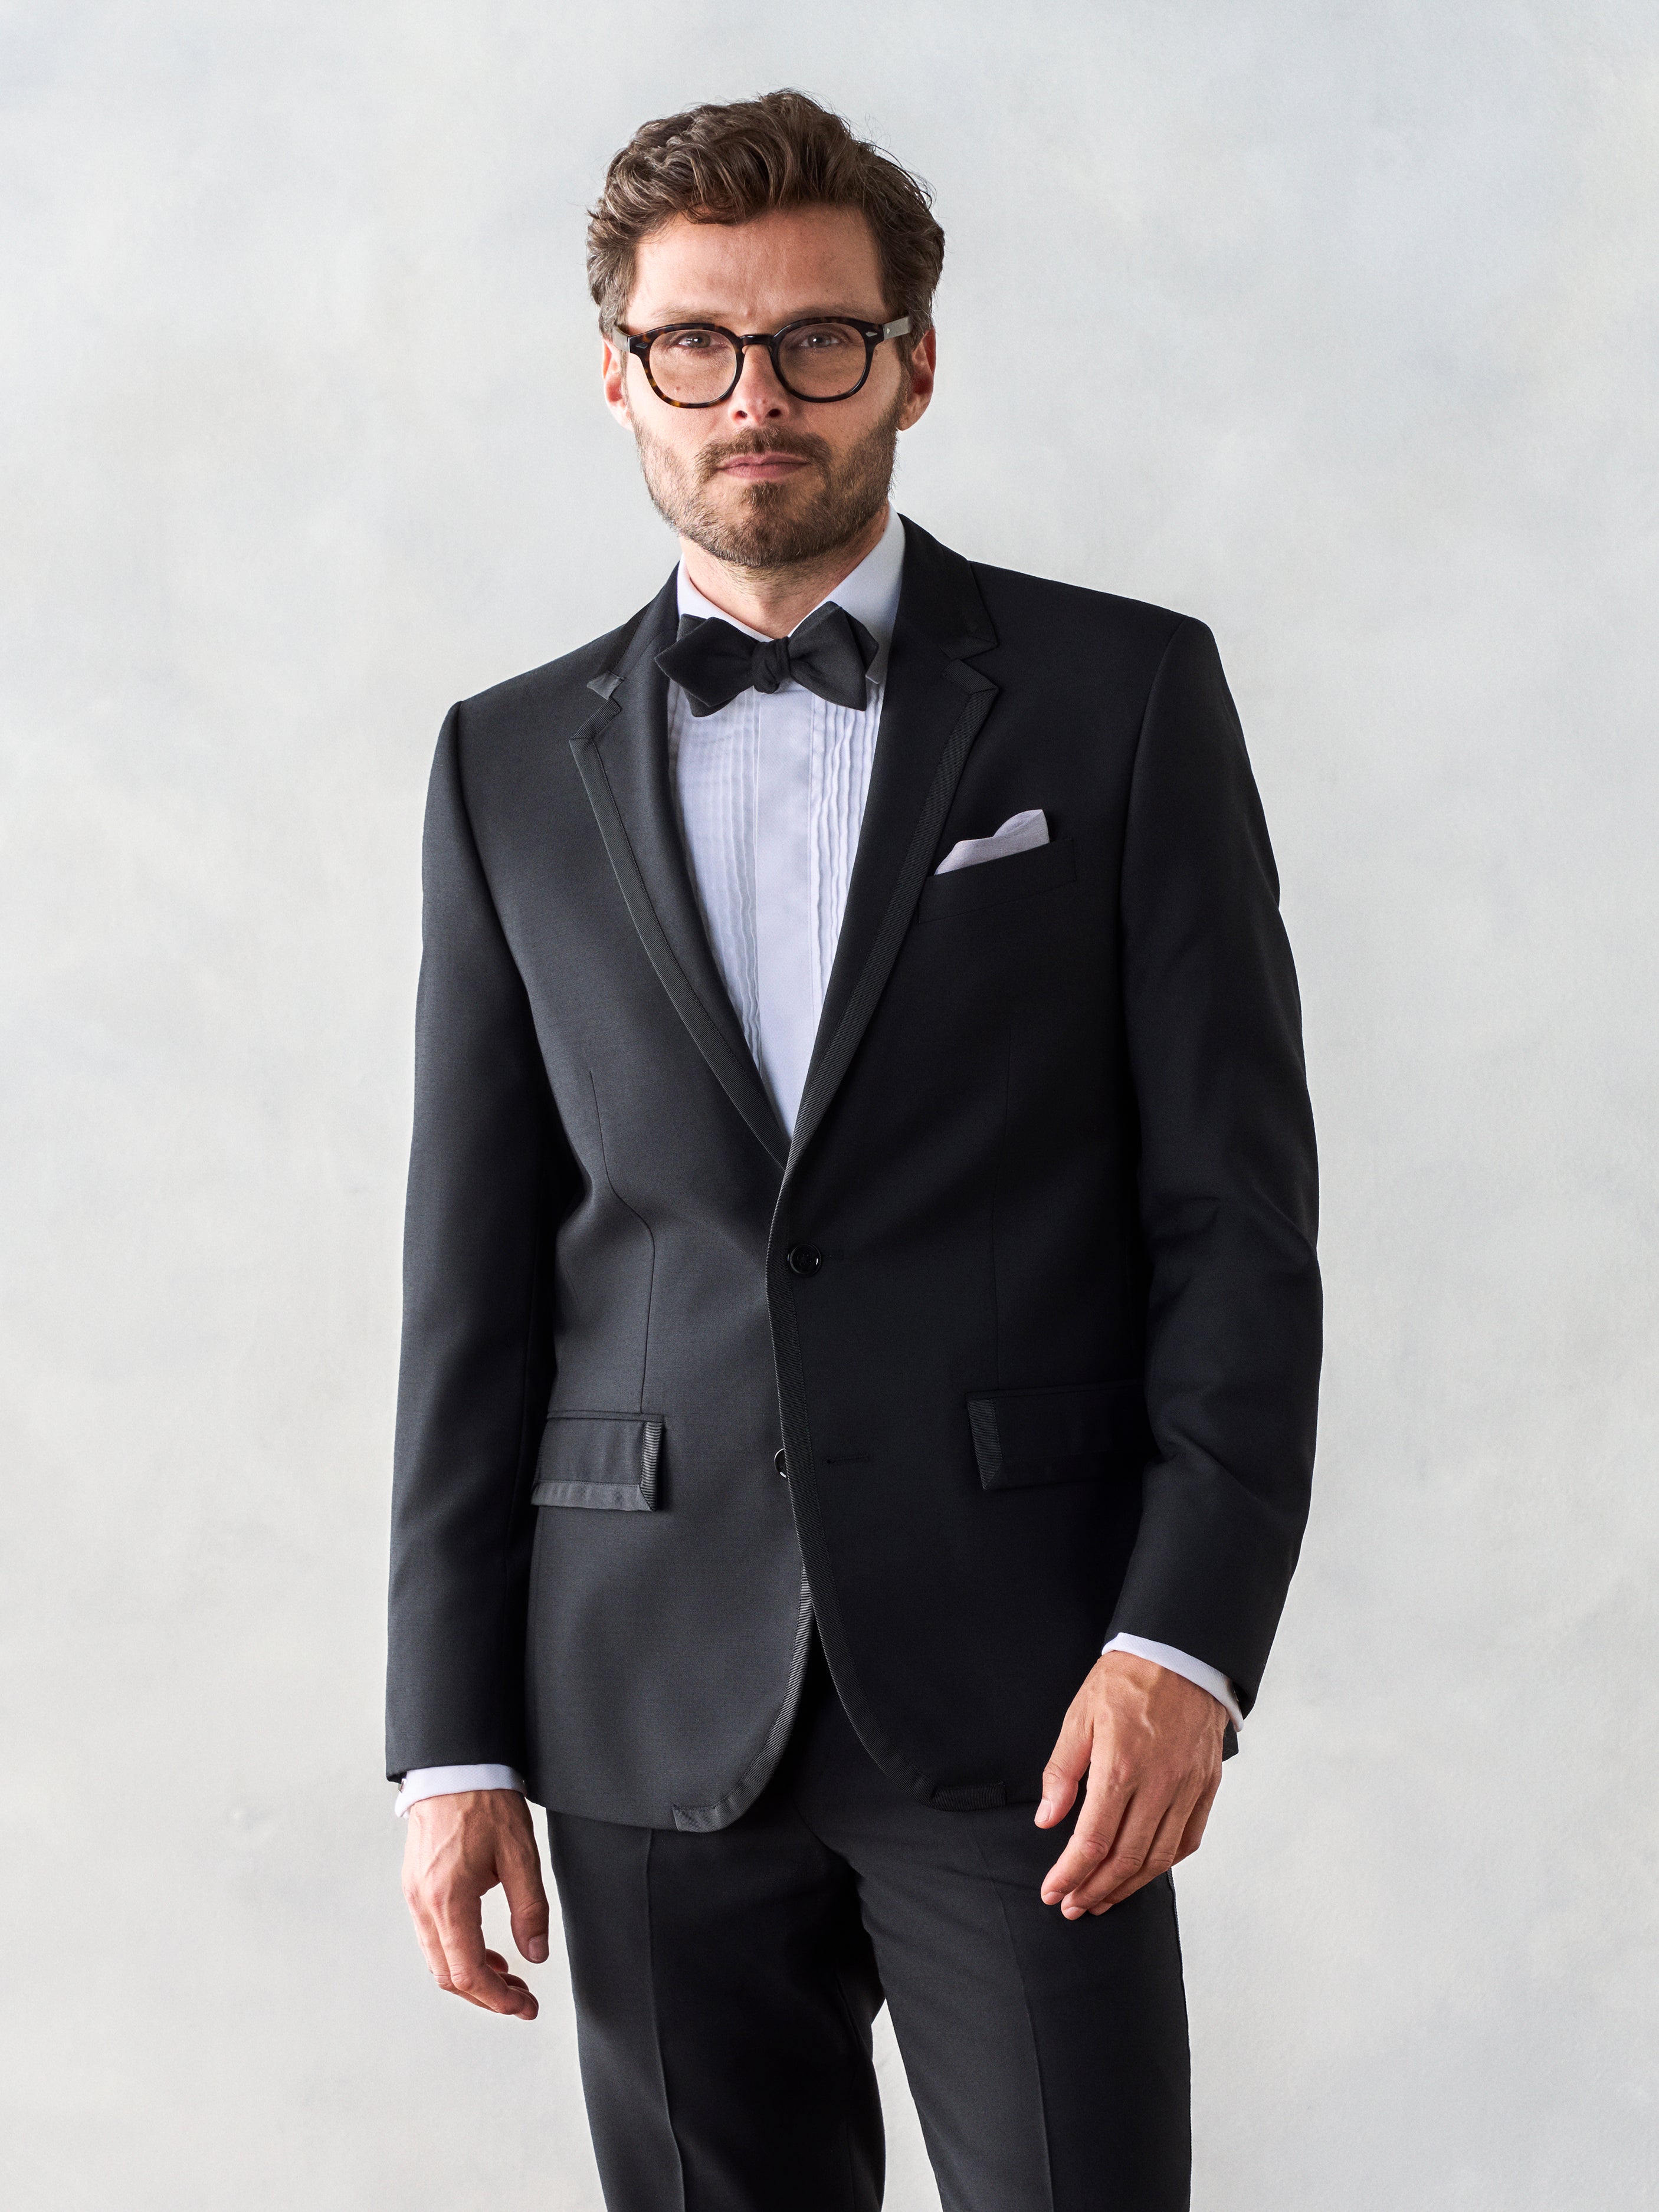 Browse Suits & Tuxedos | The Black Tux